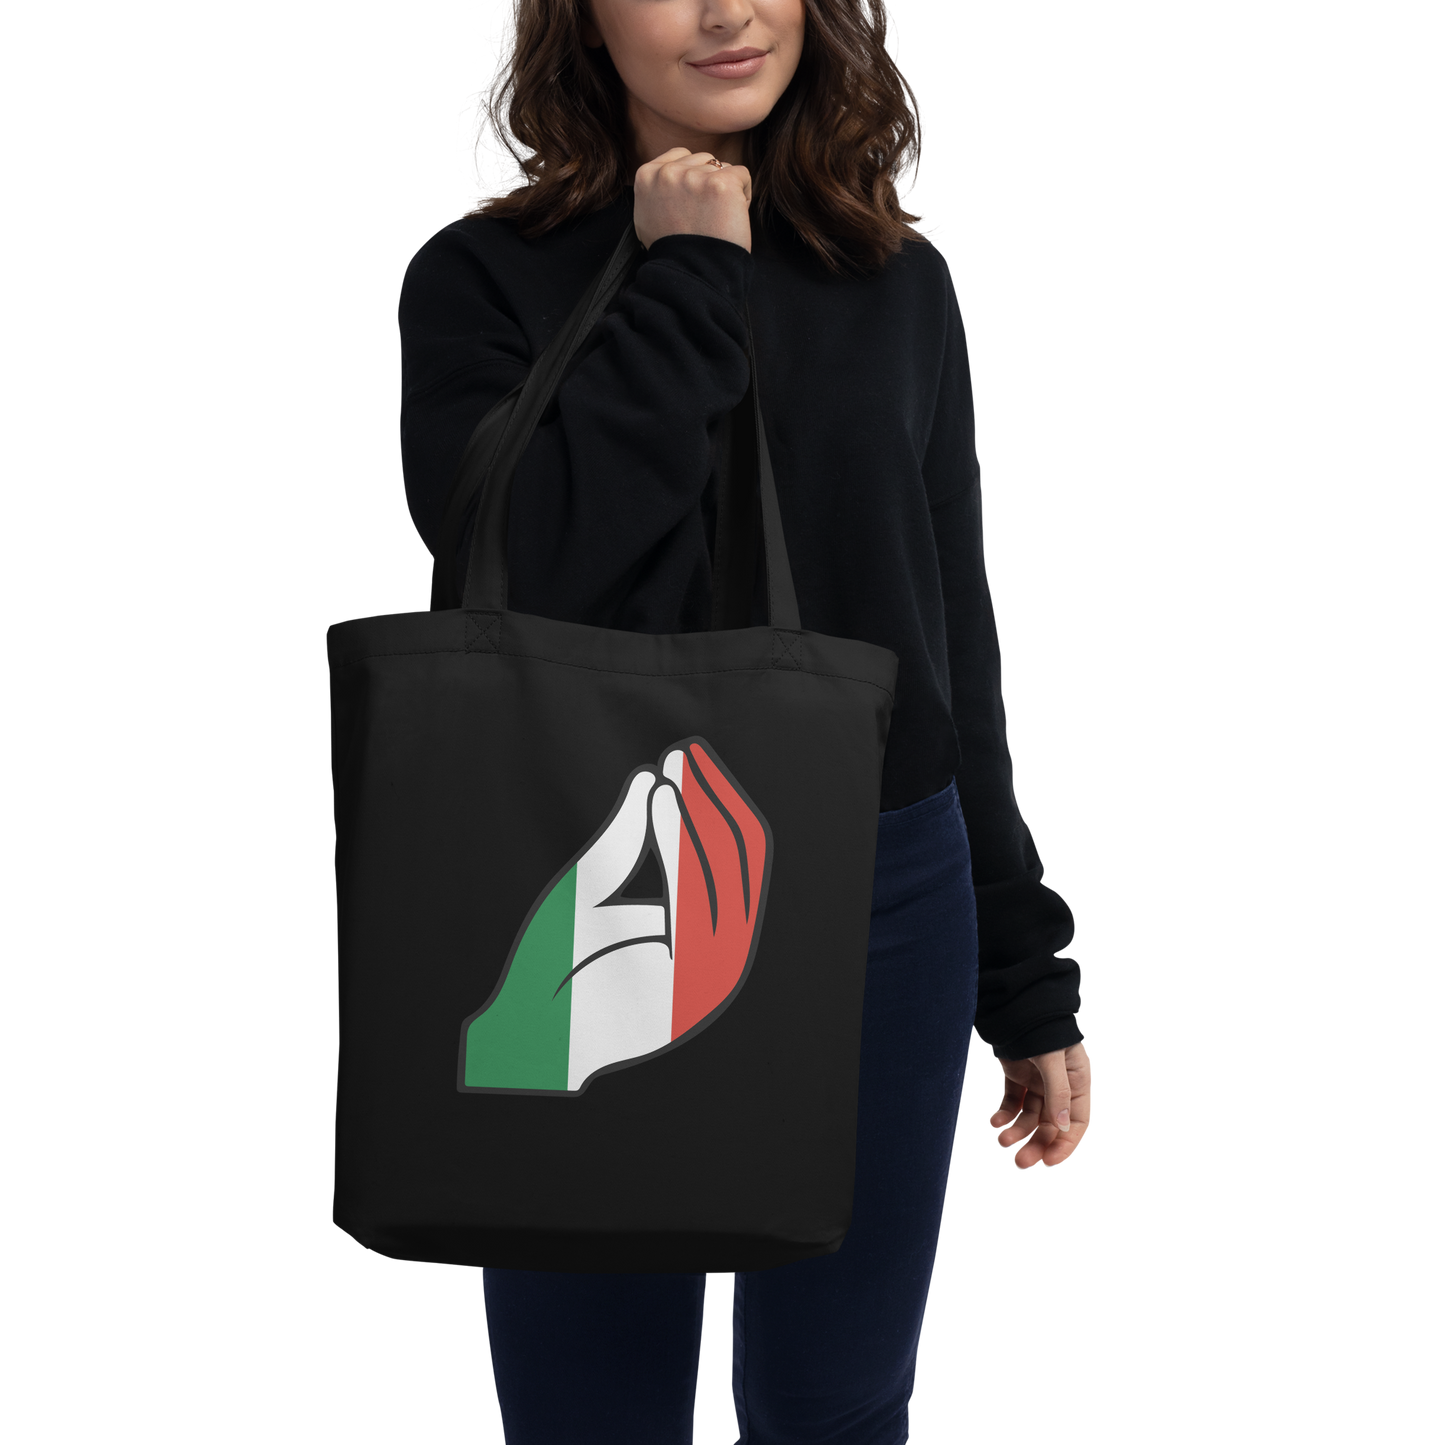 Italian Capiche Hand Standard Tote Bag - Symbolic Italian Gesture Carryall